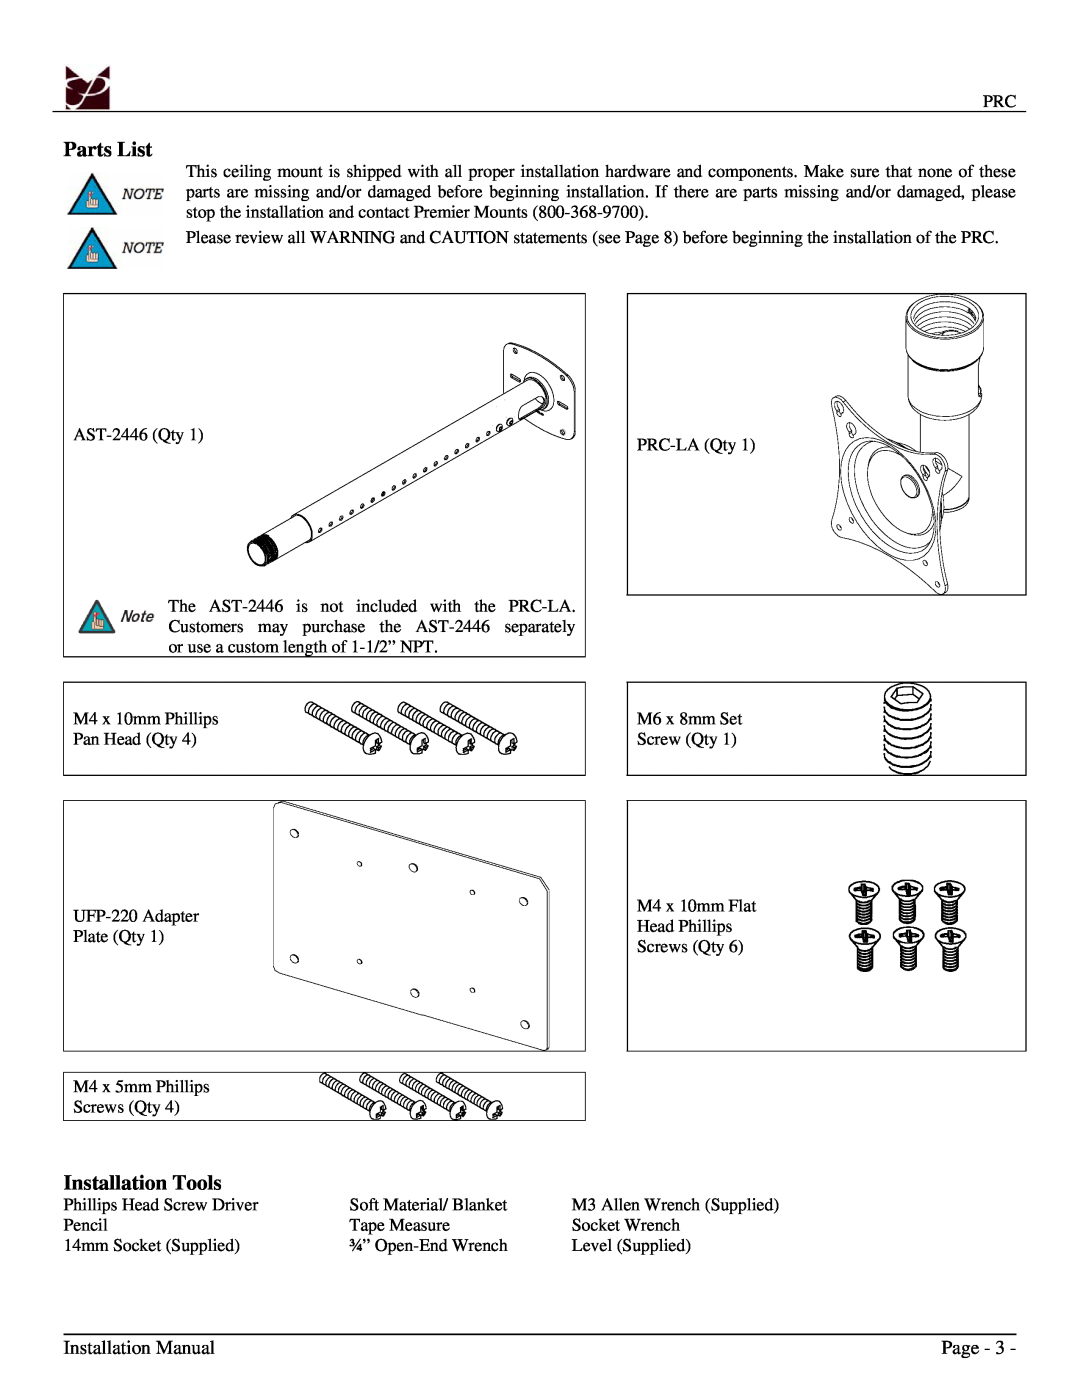 Premier Mounts 9533-004-001-07, PRC installation instructions Parts List, Installation Tools, Installation Manual, Page 